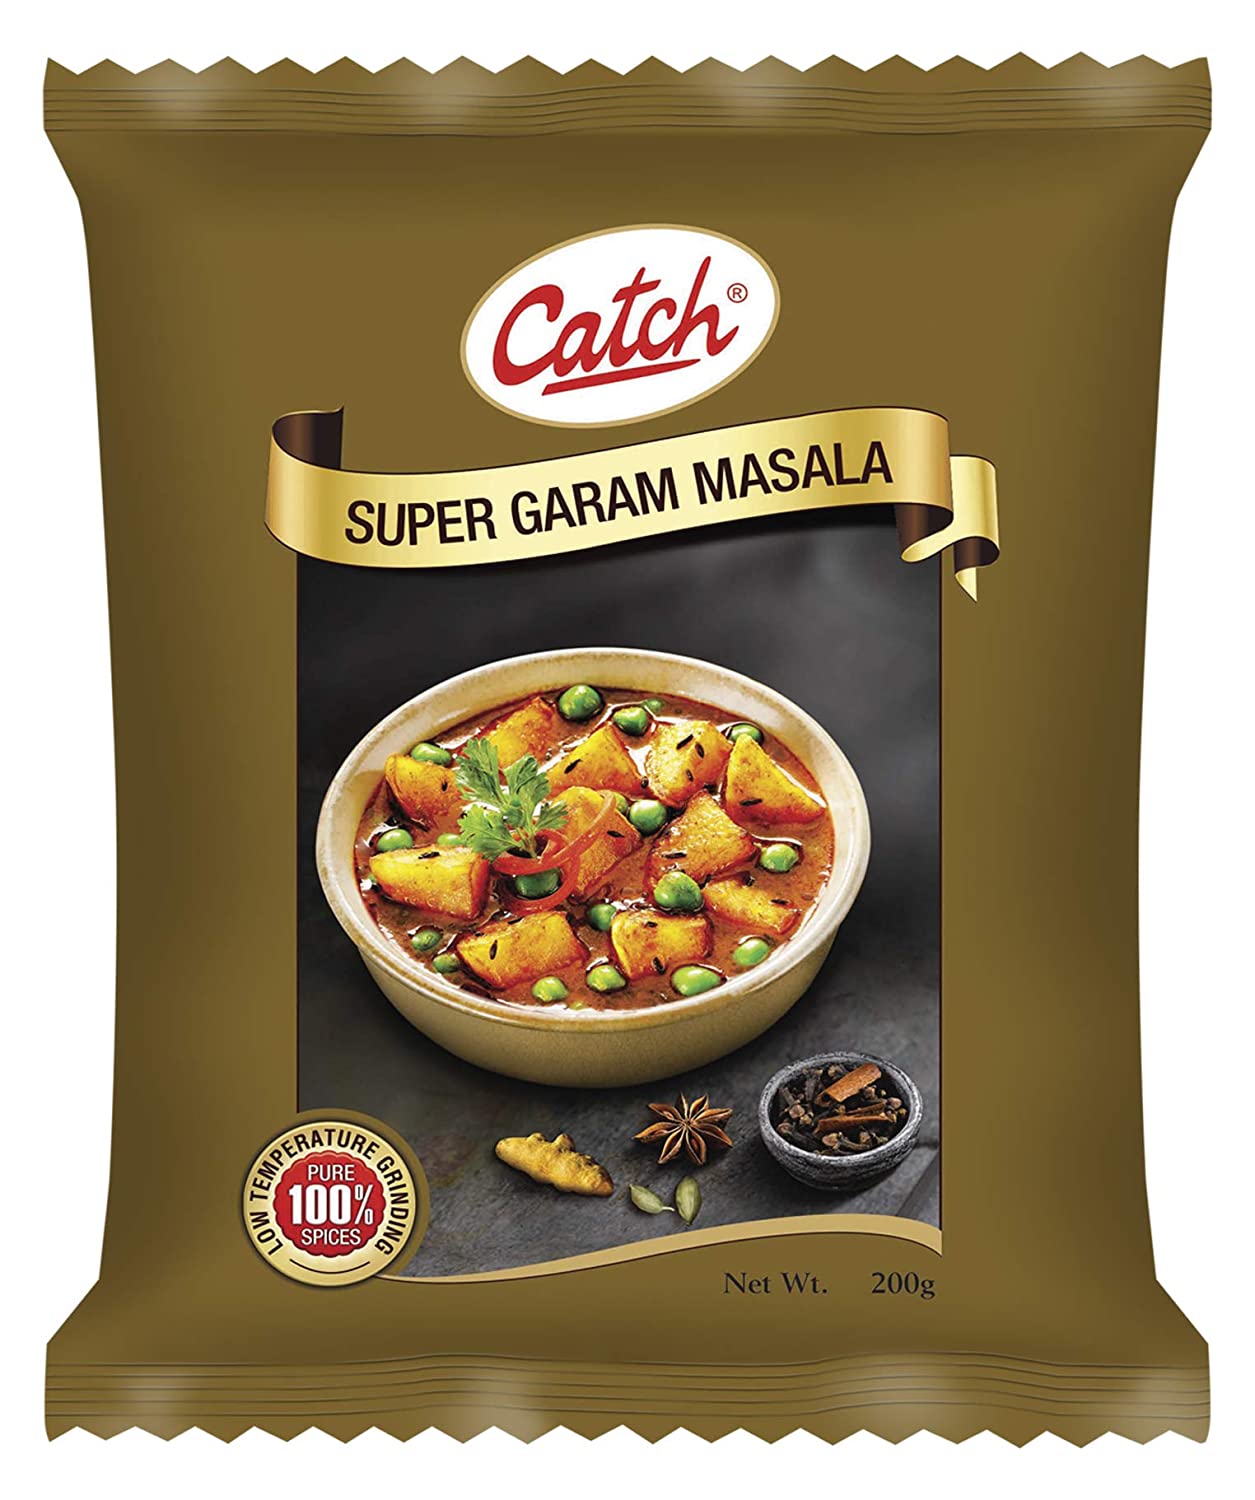 Catch Super Garam Masala Image